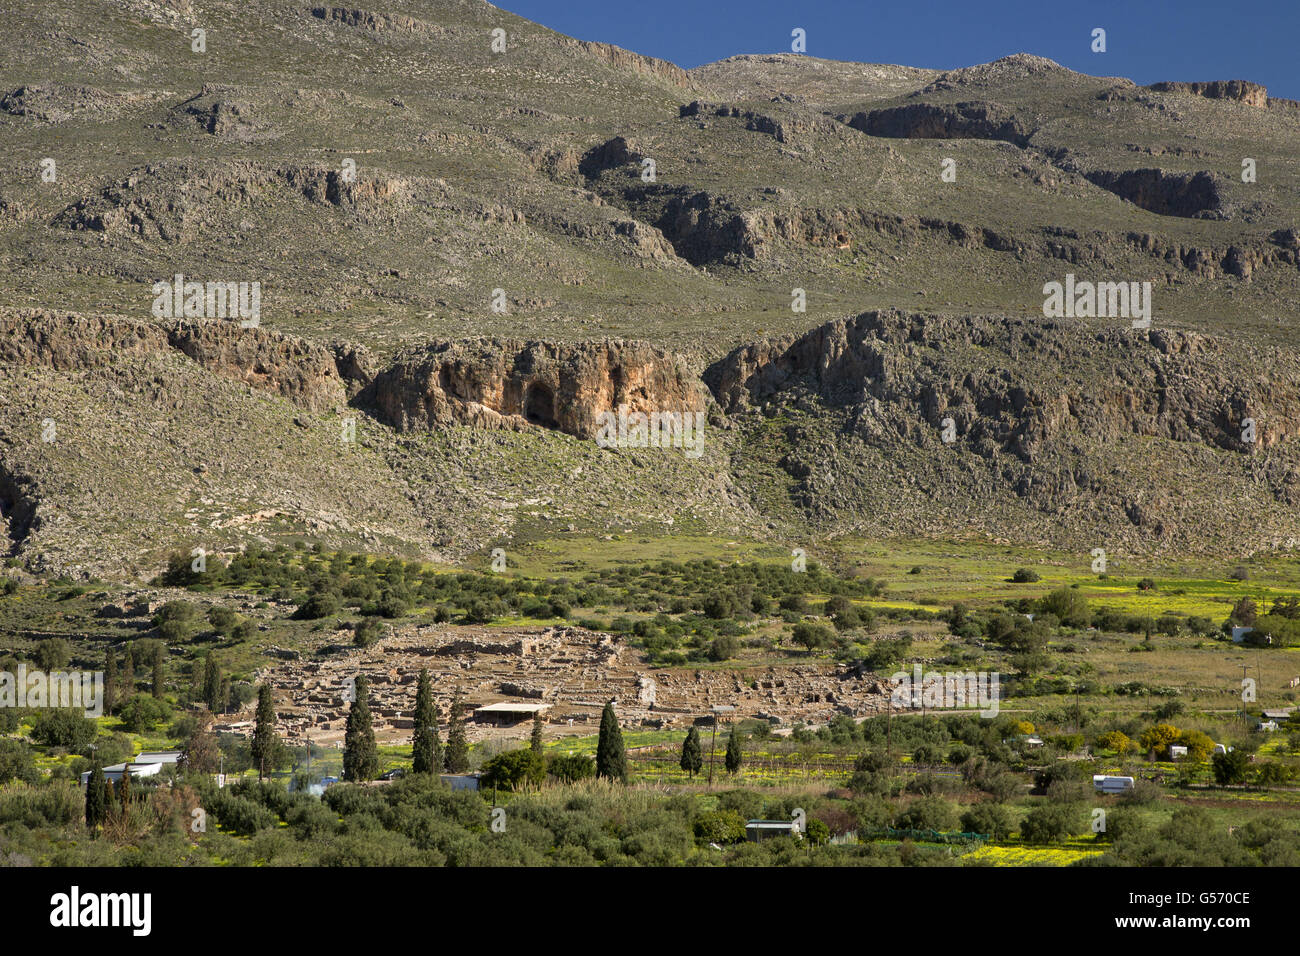 View of countryside and ancient minoan ruins, Kato Zakros, Crete, Greece, April Stock Photo